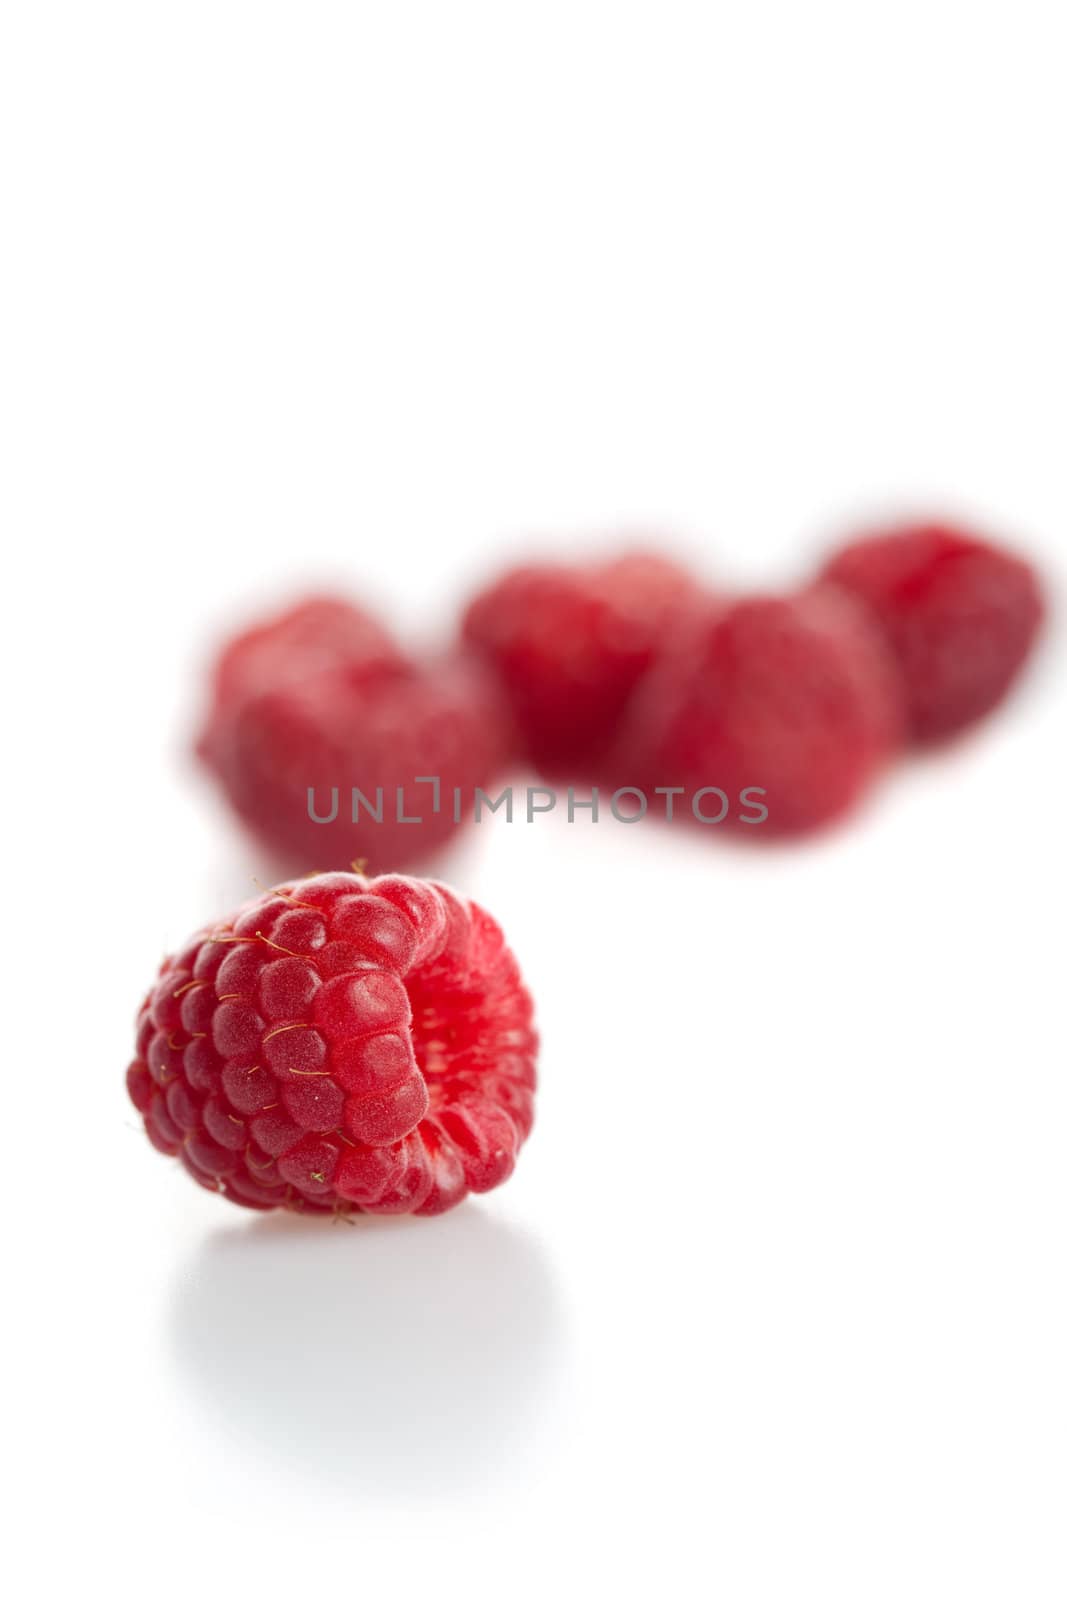 Raspberry on white by Fotosmurf